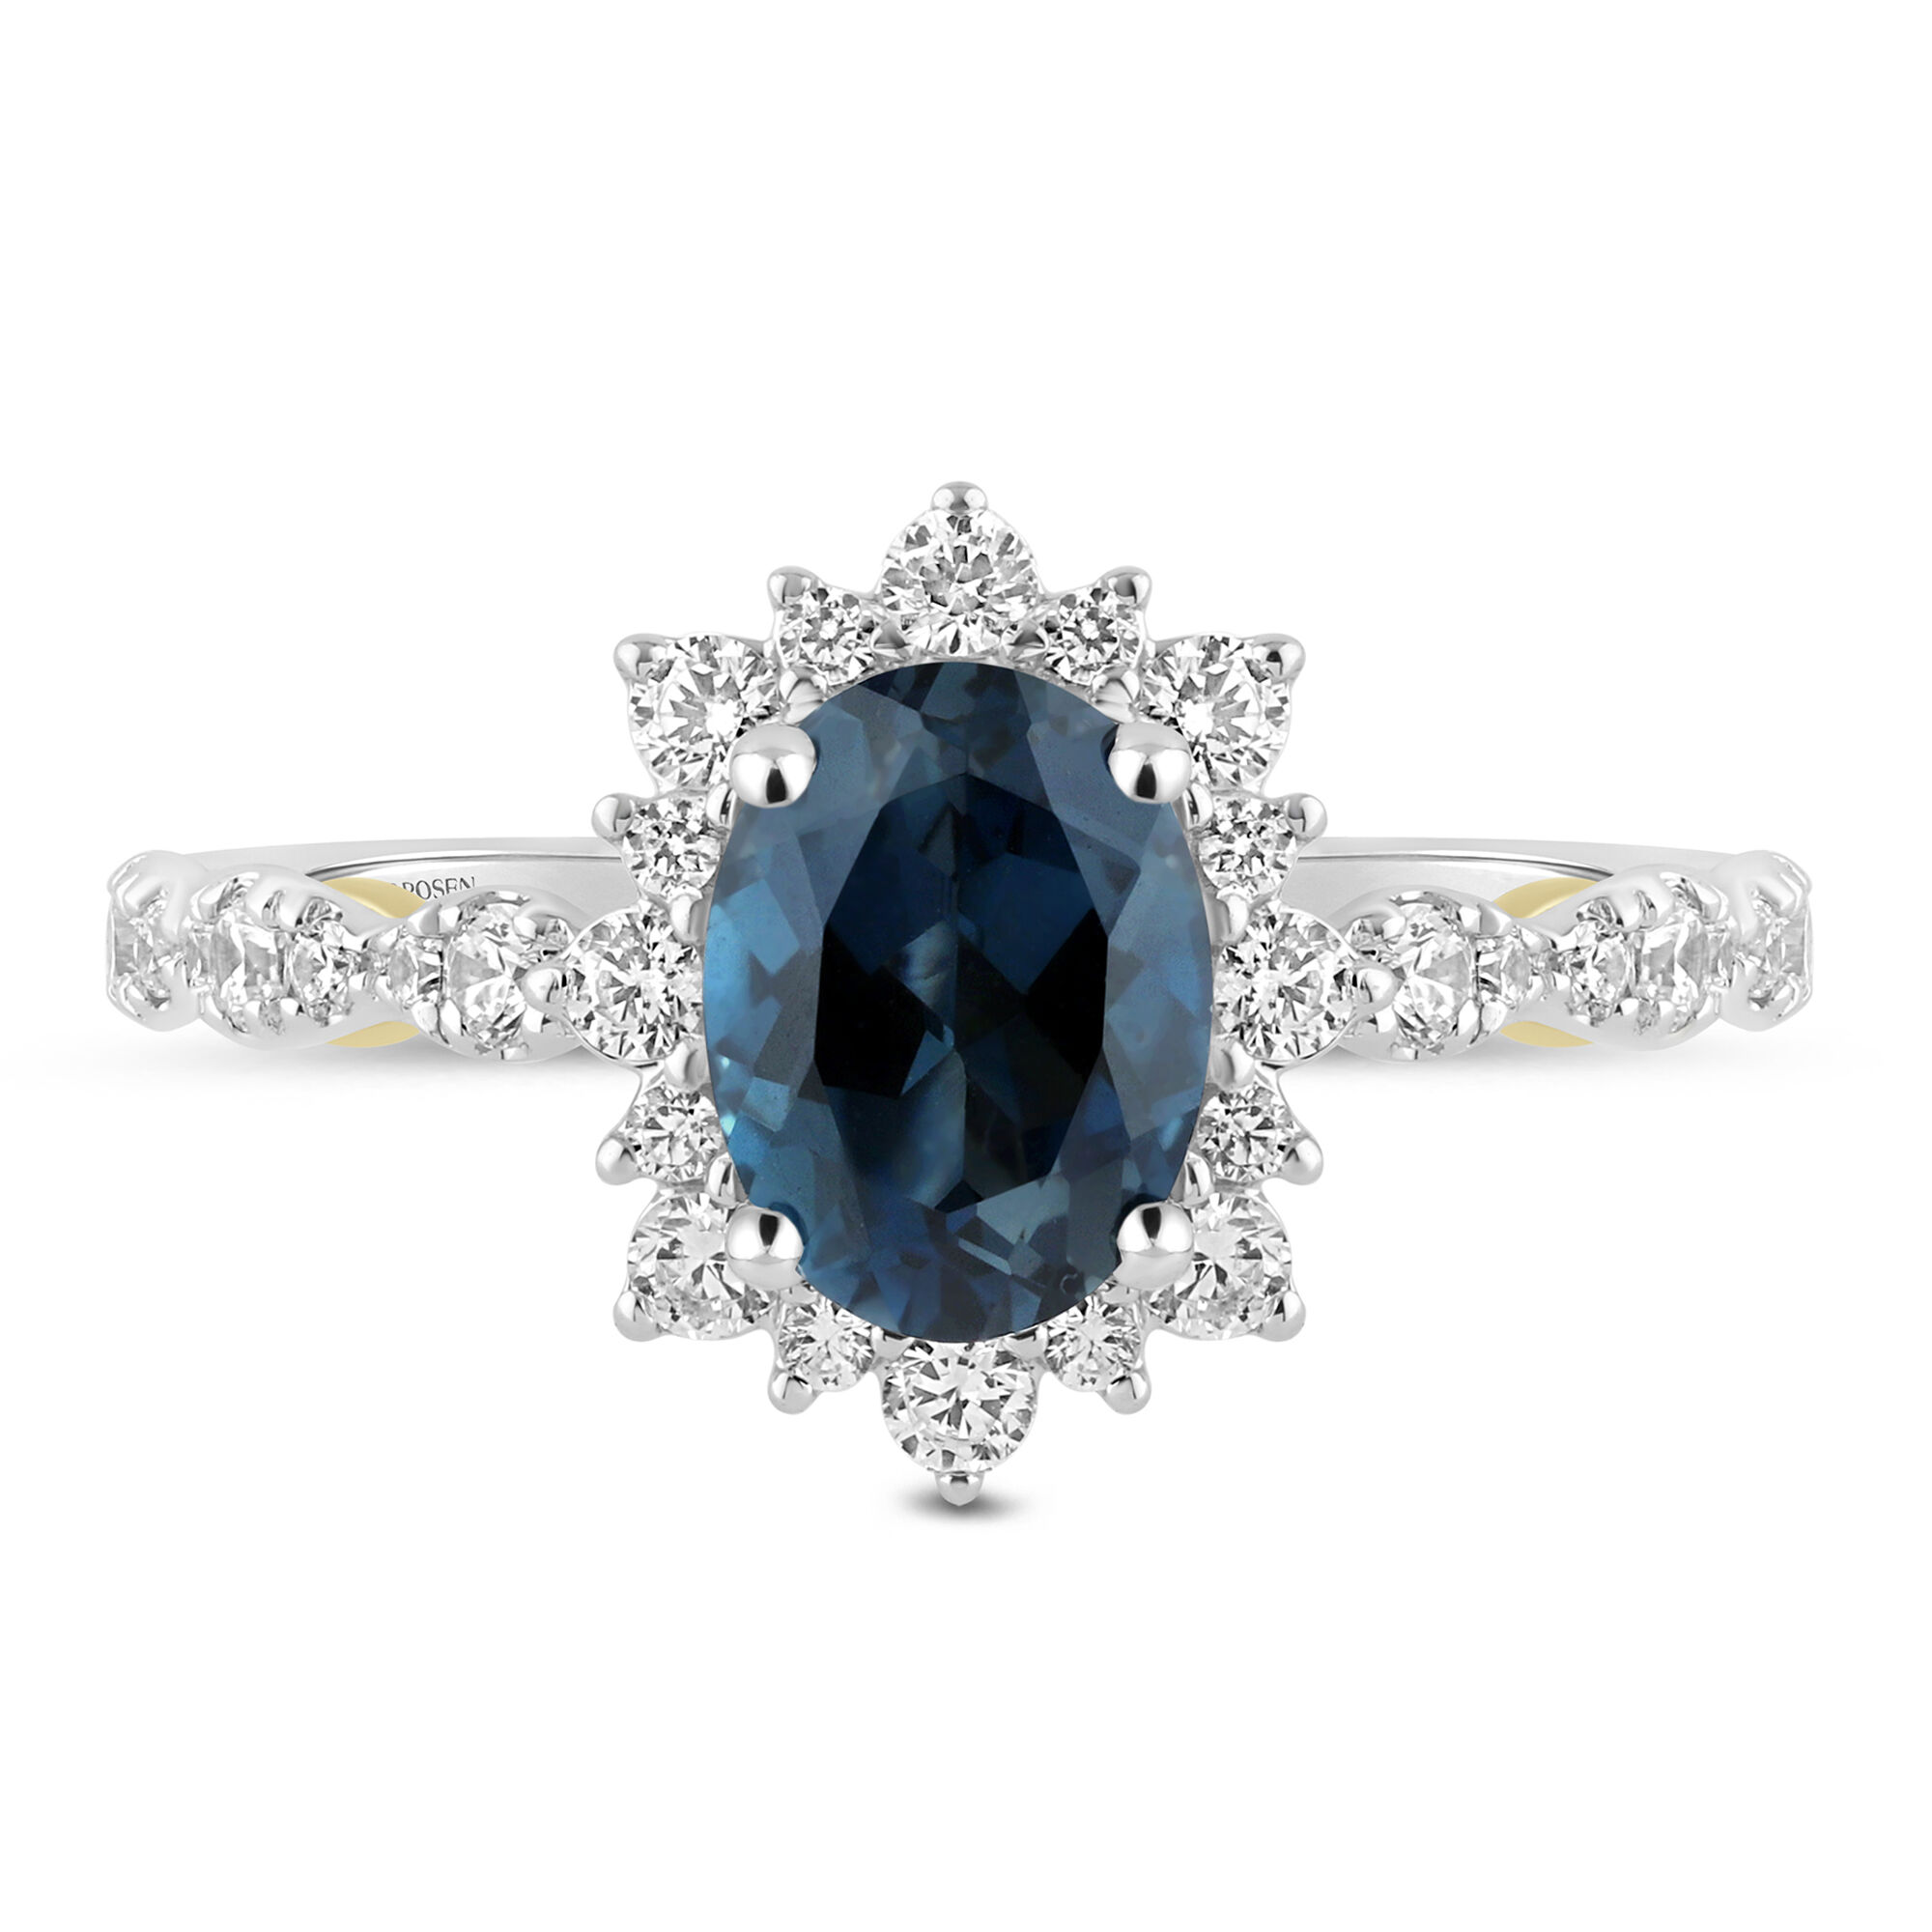 WDIYIEETN 14k Gold Sea Blue Topaz Love Heart CZ Diamond Ring Women  Anniversary Engagement Wedding Gemstone Ring (6) | Amazon.com